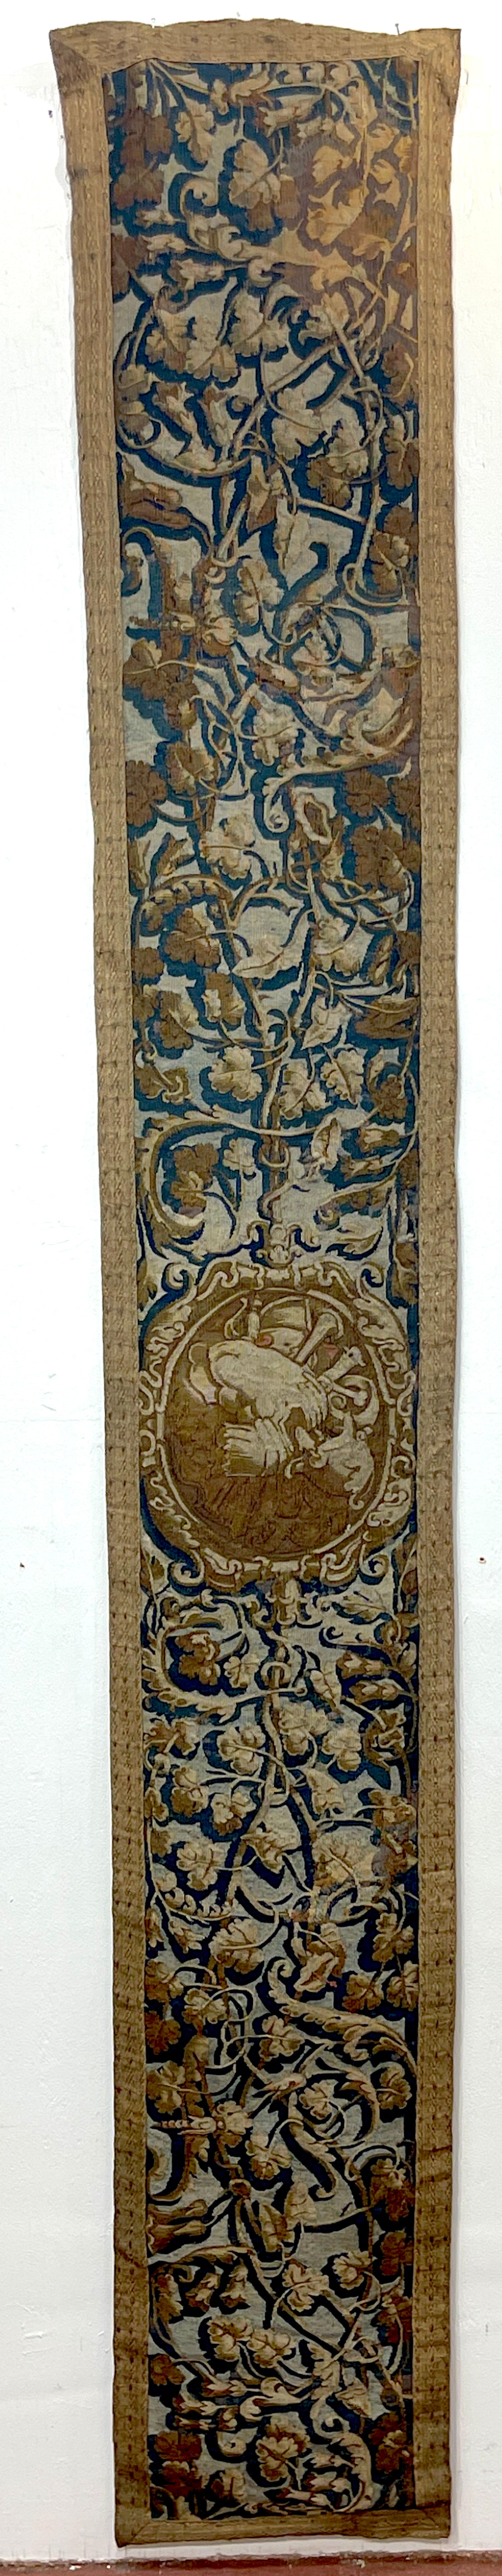 Near Pair of Antique 17th C. Belgium Flemish Tapestry Portière (Border) Panels For Sale 4